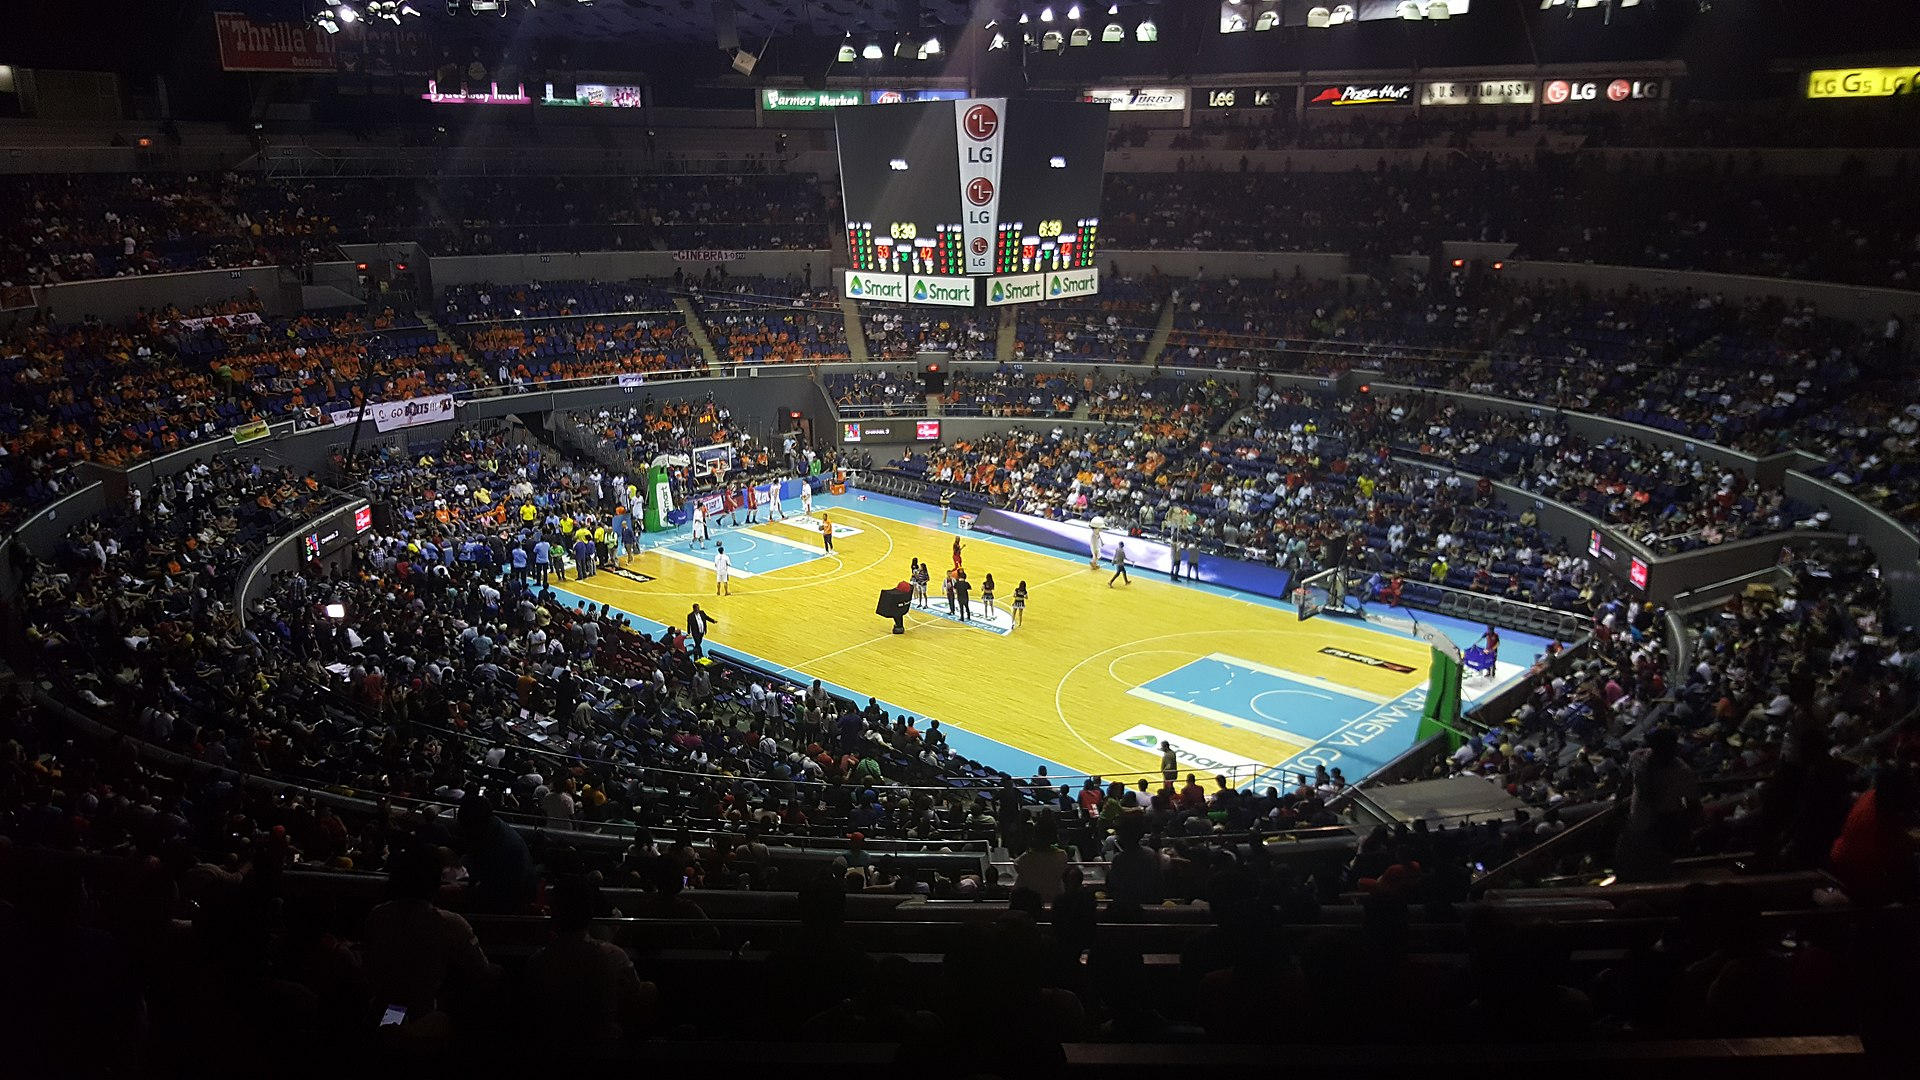 Philippine landmarks - Smart Araneta Coliseum